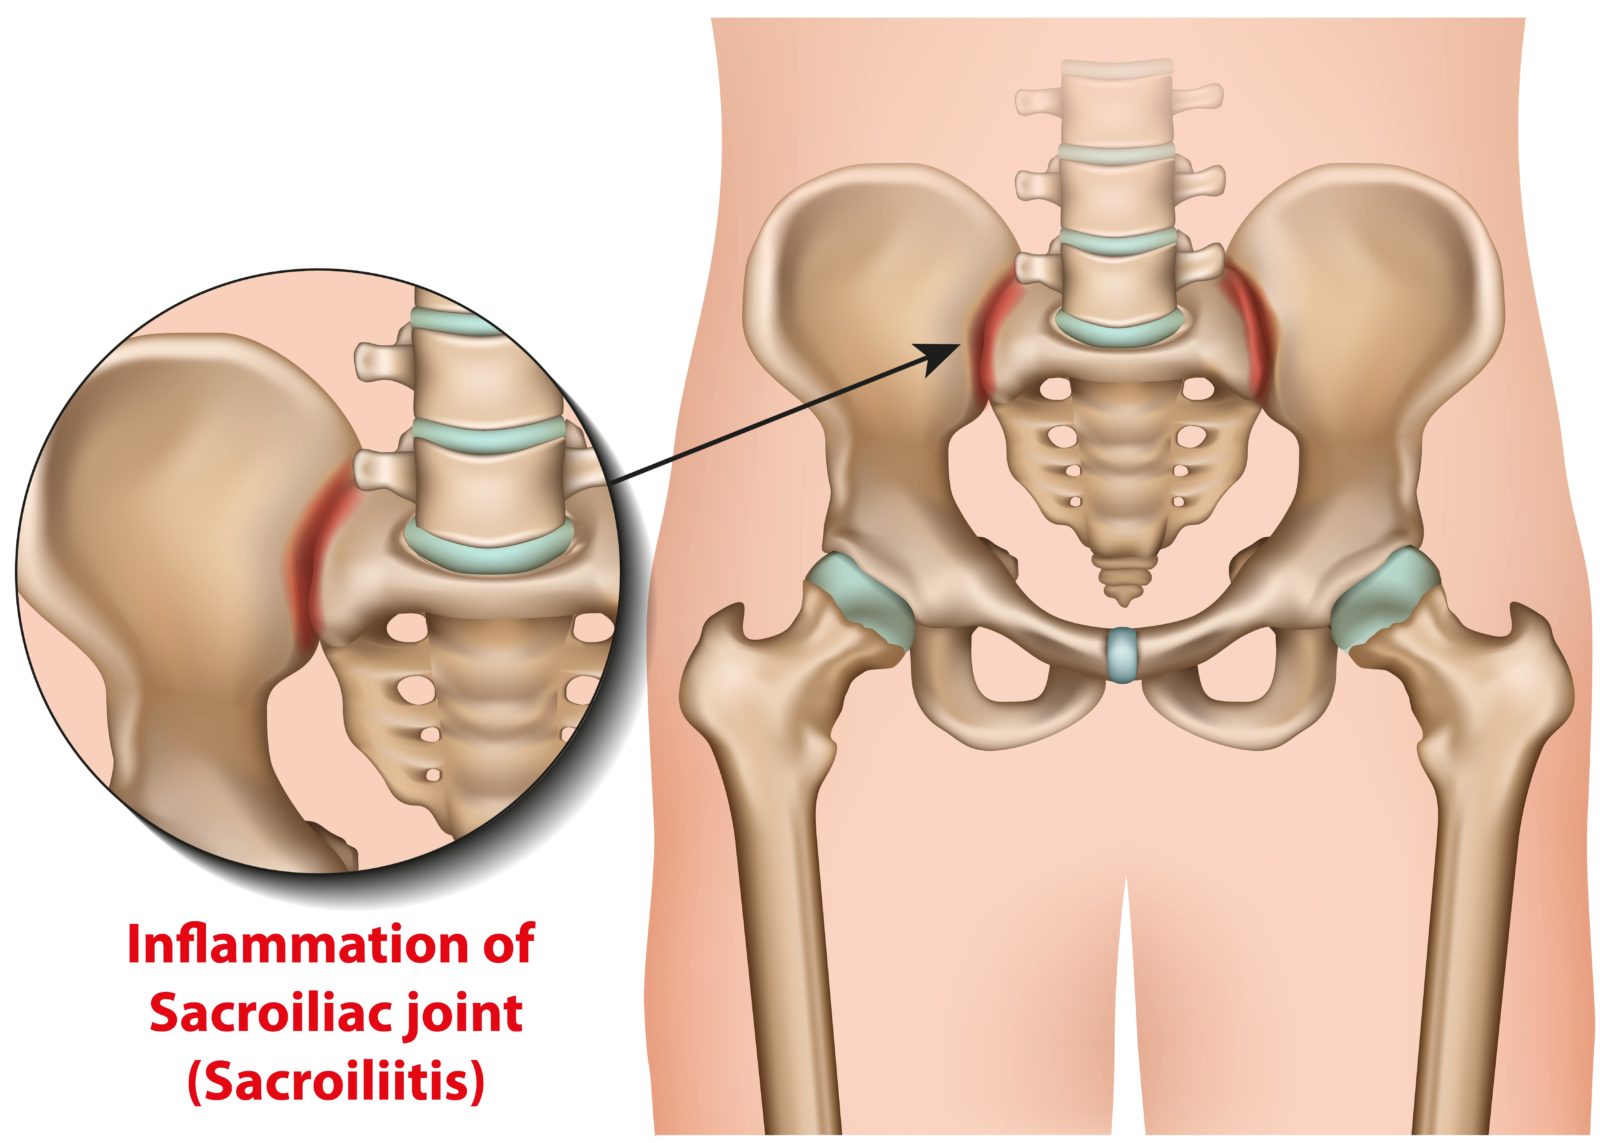 sacroiliac joints